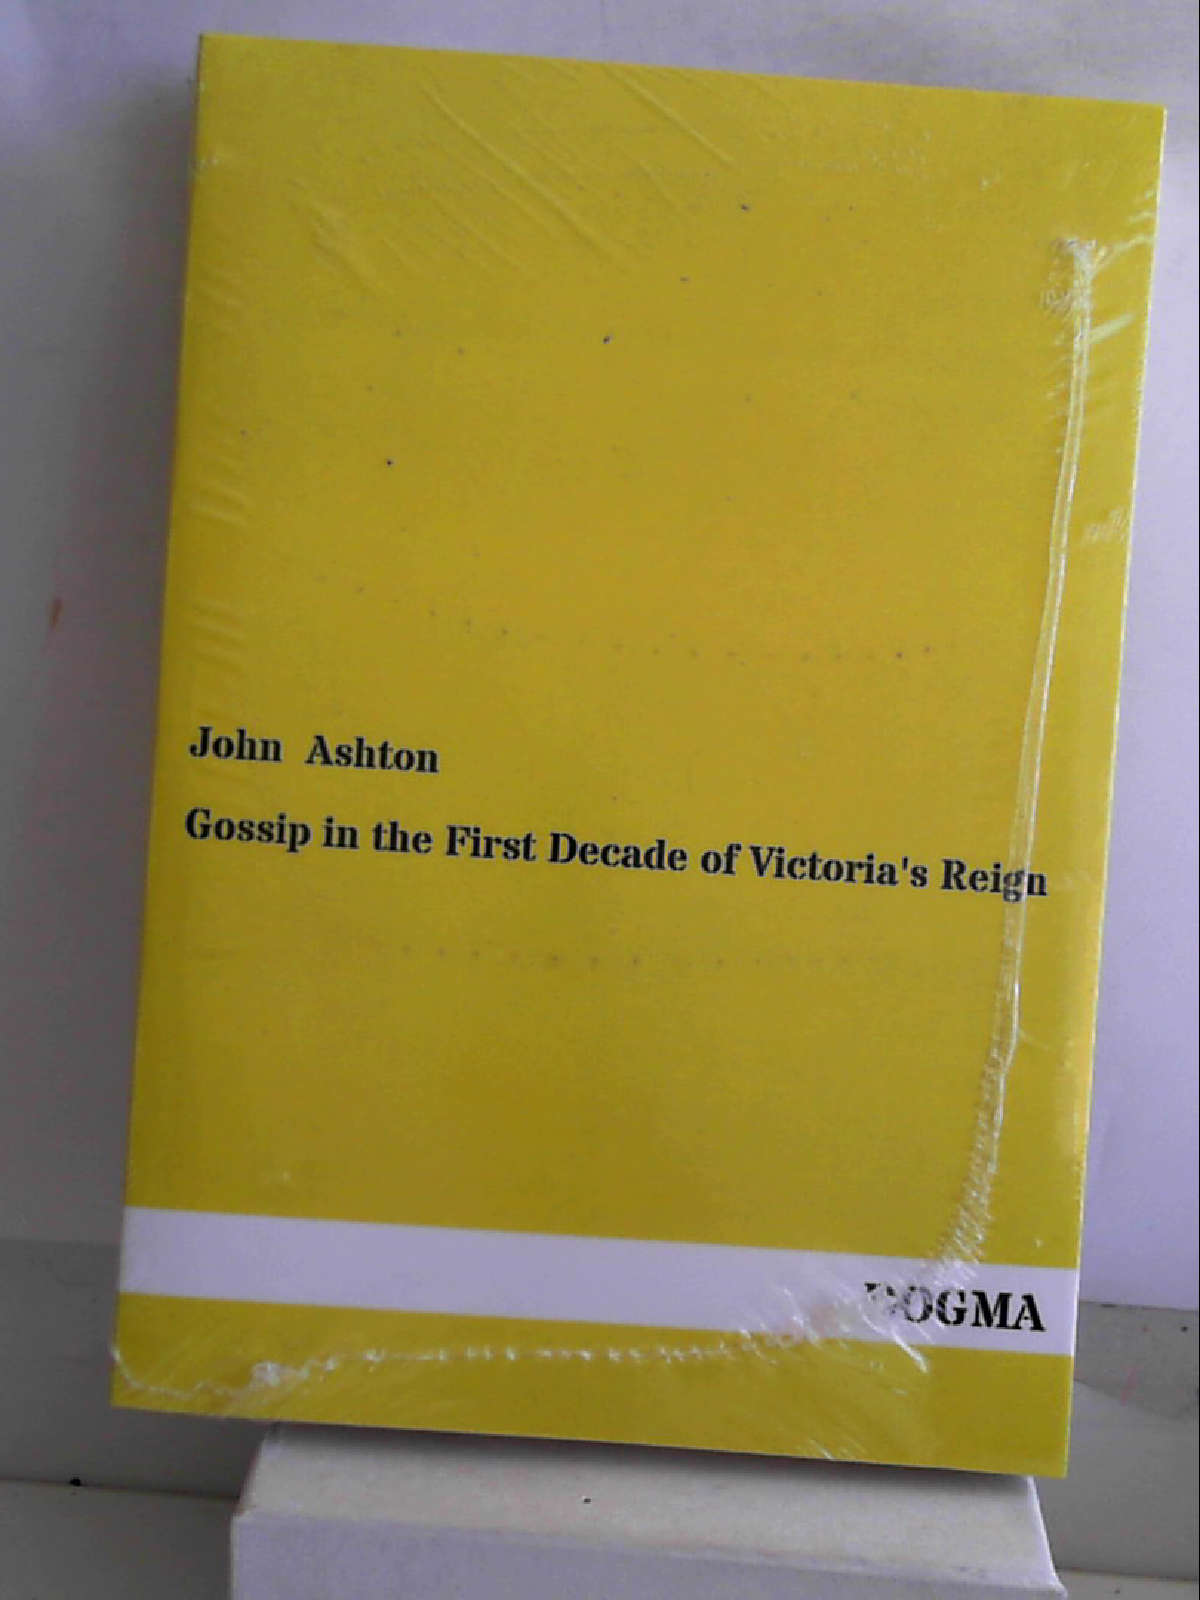 Gossip in the First Decade of Victoria's Reign [Paperback] [Jan 06, 2013] Ashton, John - John Ashton